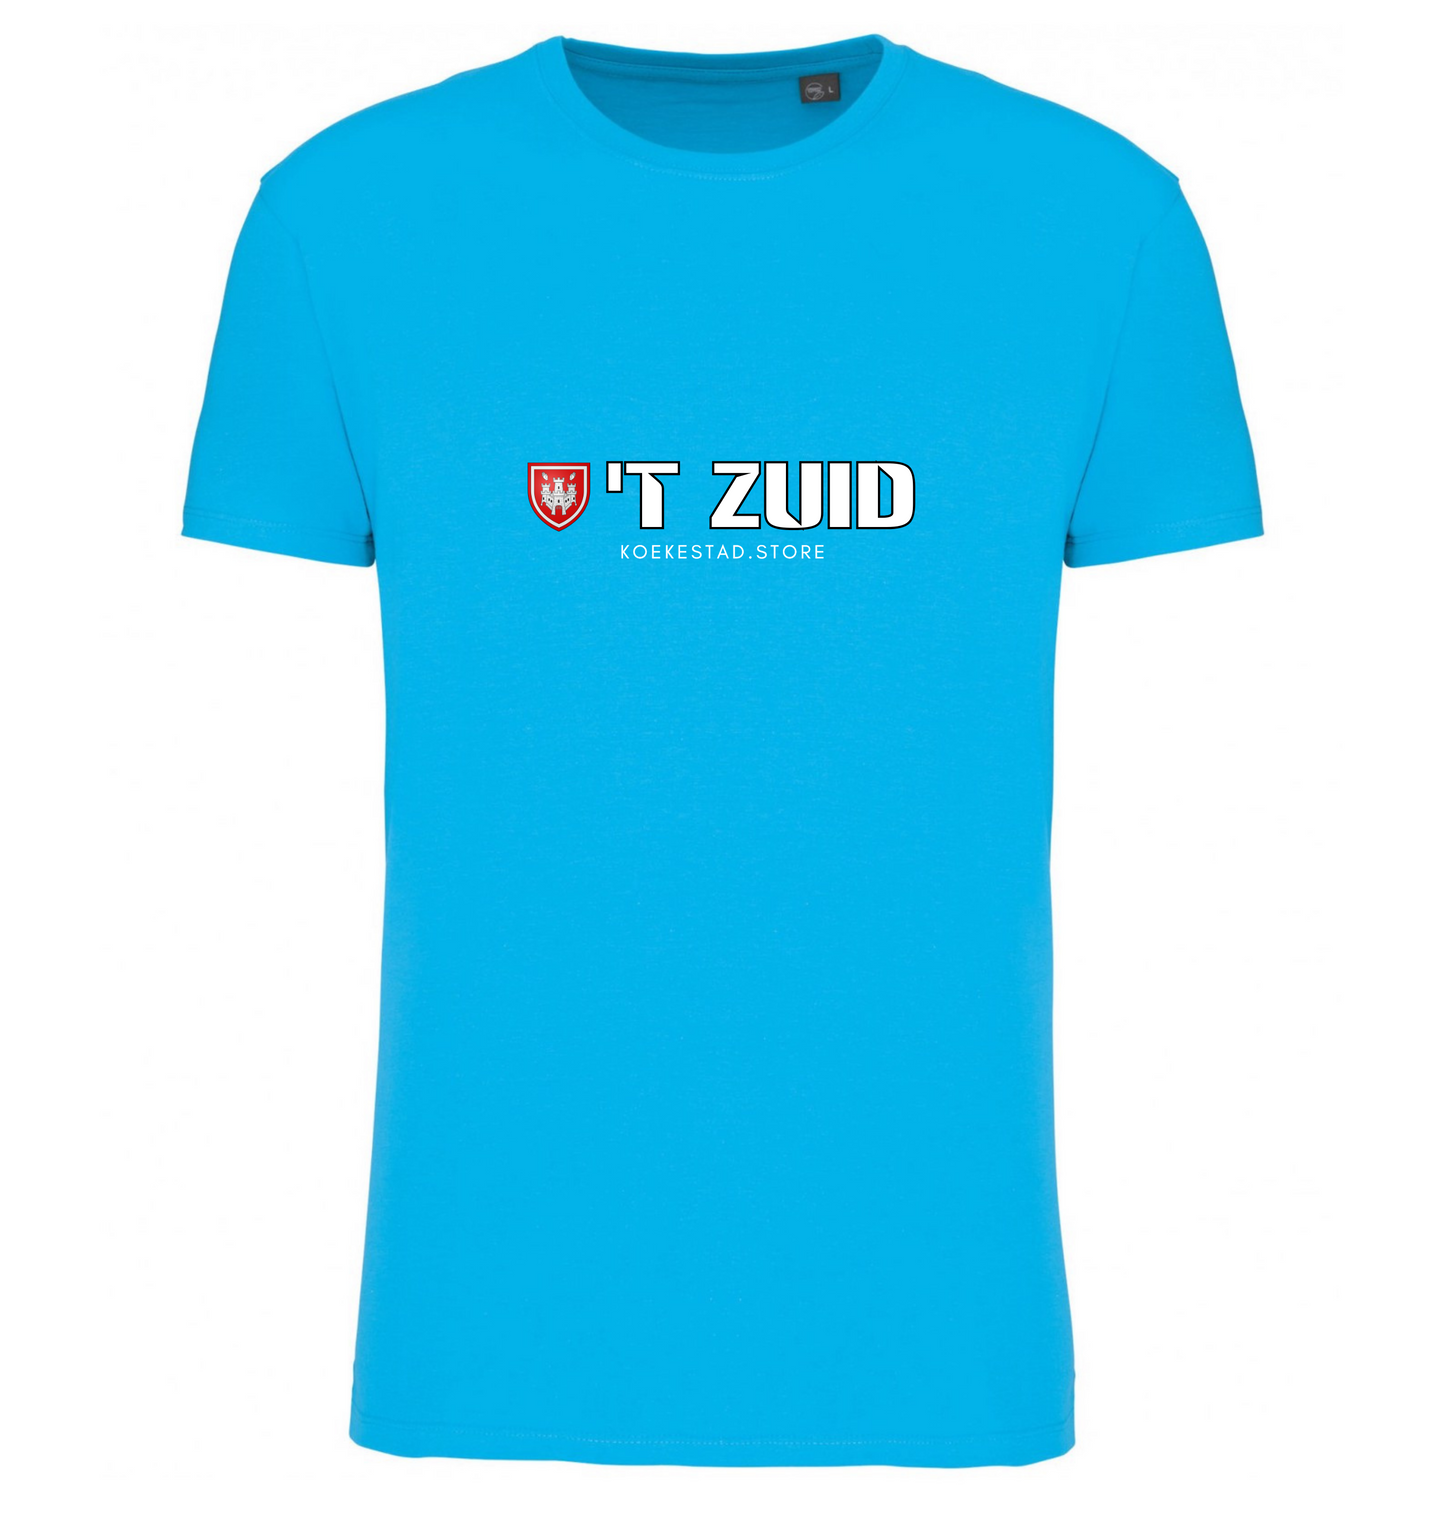 Premium T-Shirt - T ZUID wijk - 100 % Biokatoen Unisex